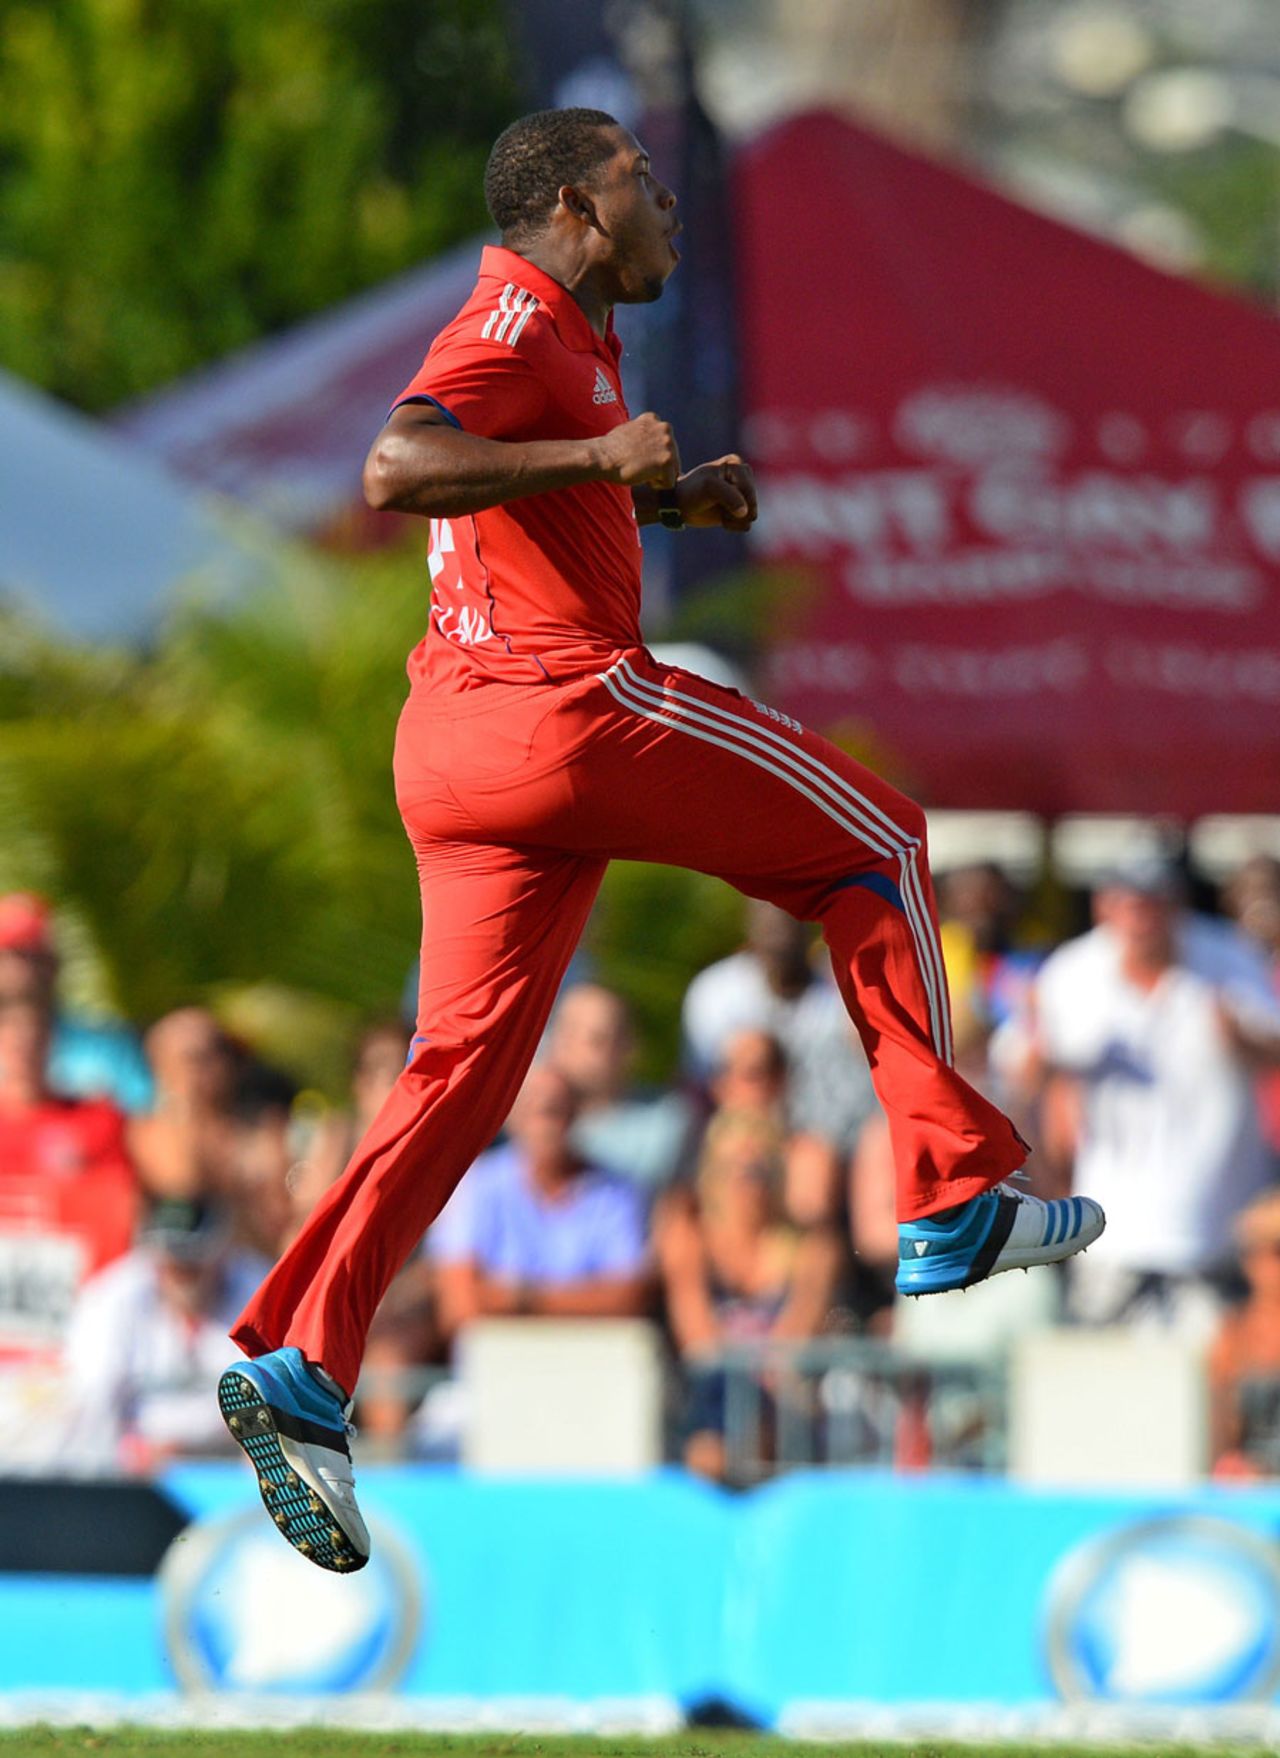 Chris Jordan enjoyed his afternoon at Kensington Oval, West Indies v England, 3rd T20, Barbados, March 13, 2014